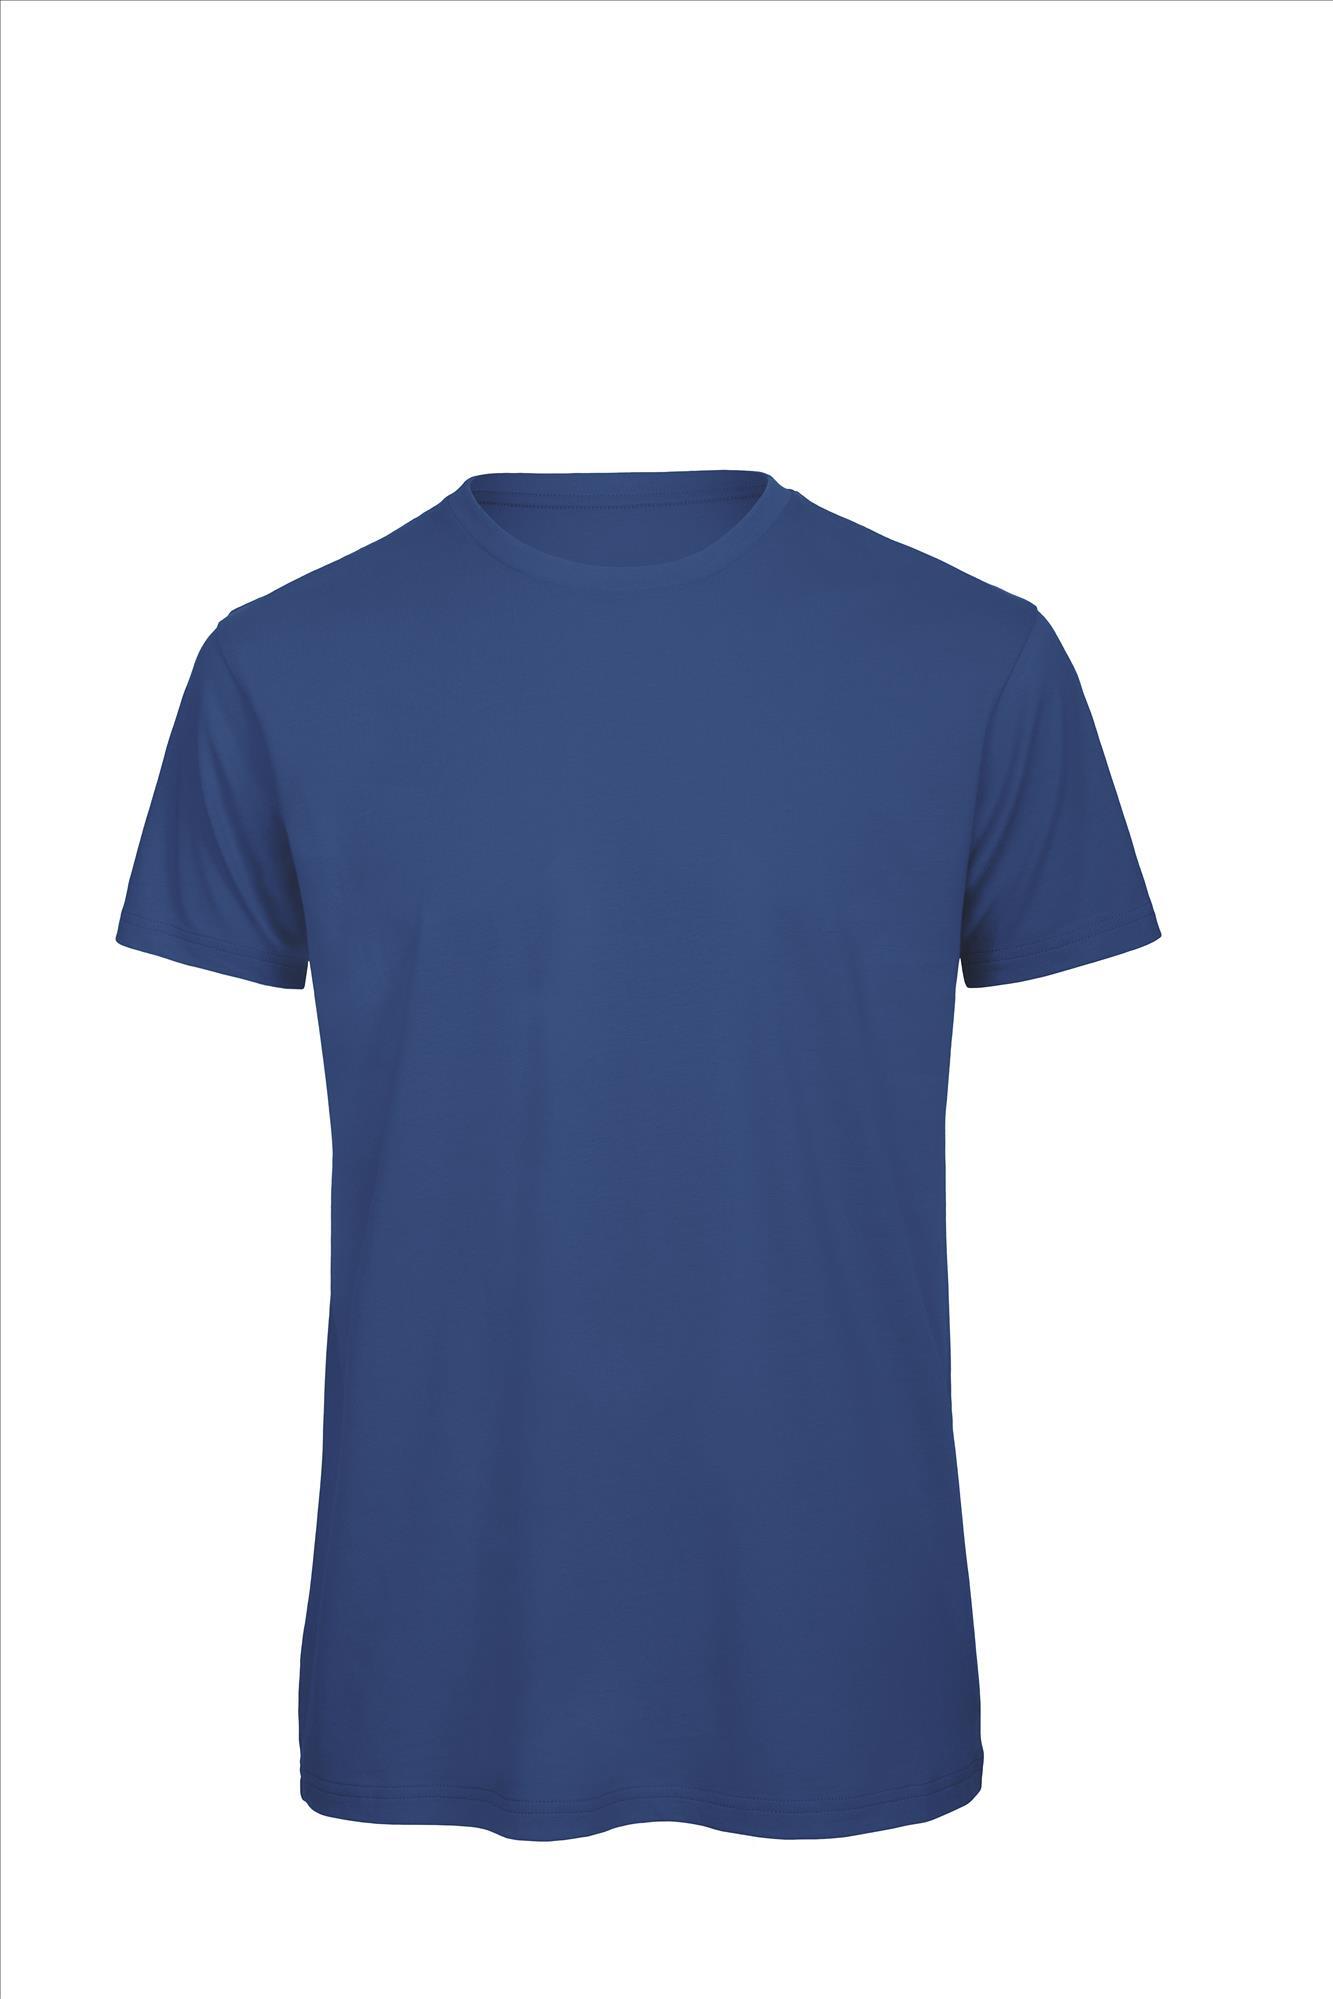 Heren T-shirt royal blauw te personaliseren bedrukbaar duurzaam shirt